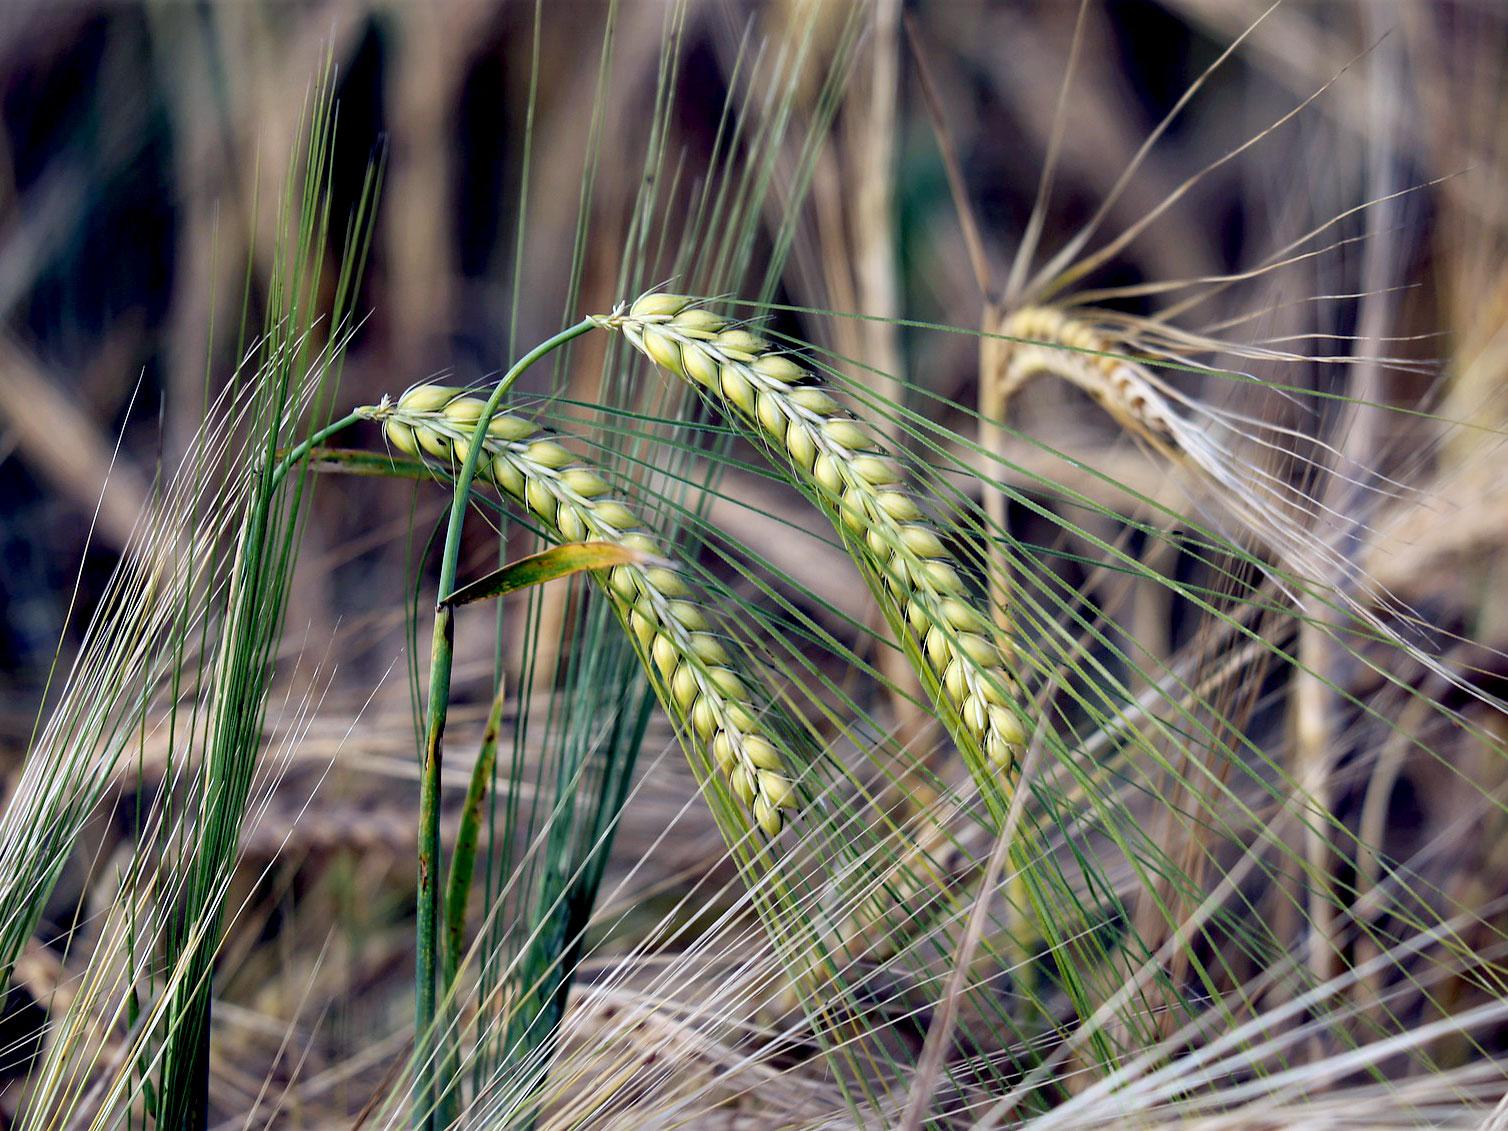 Barley image by Goran Horvat from Pixabay 